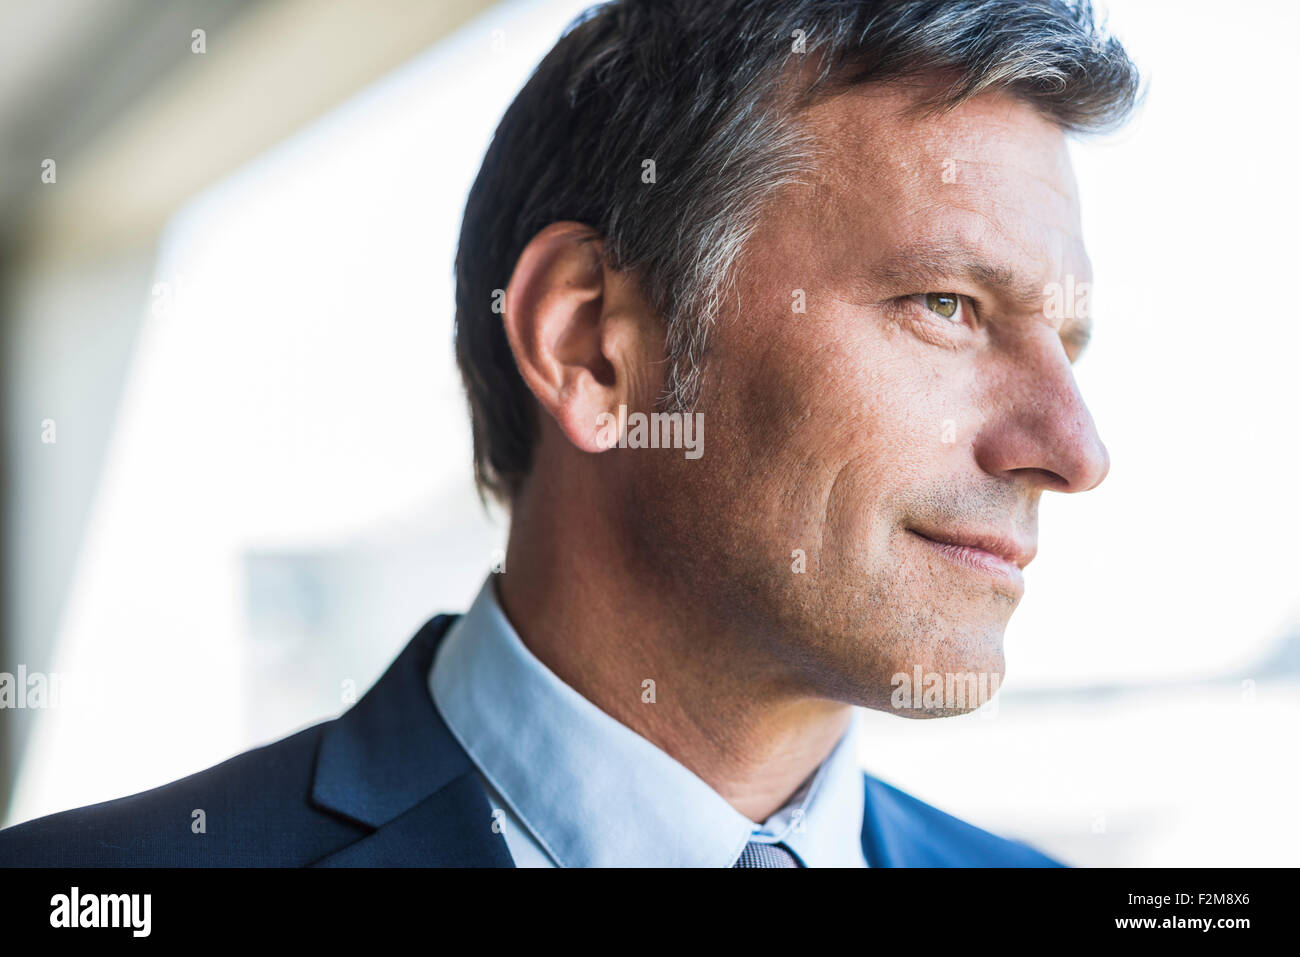 Mature businessman smiling confidently, portrait Stock Photo